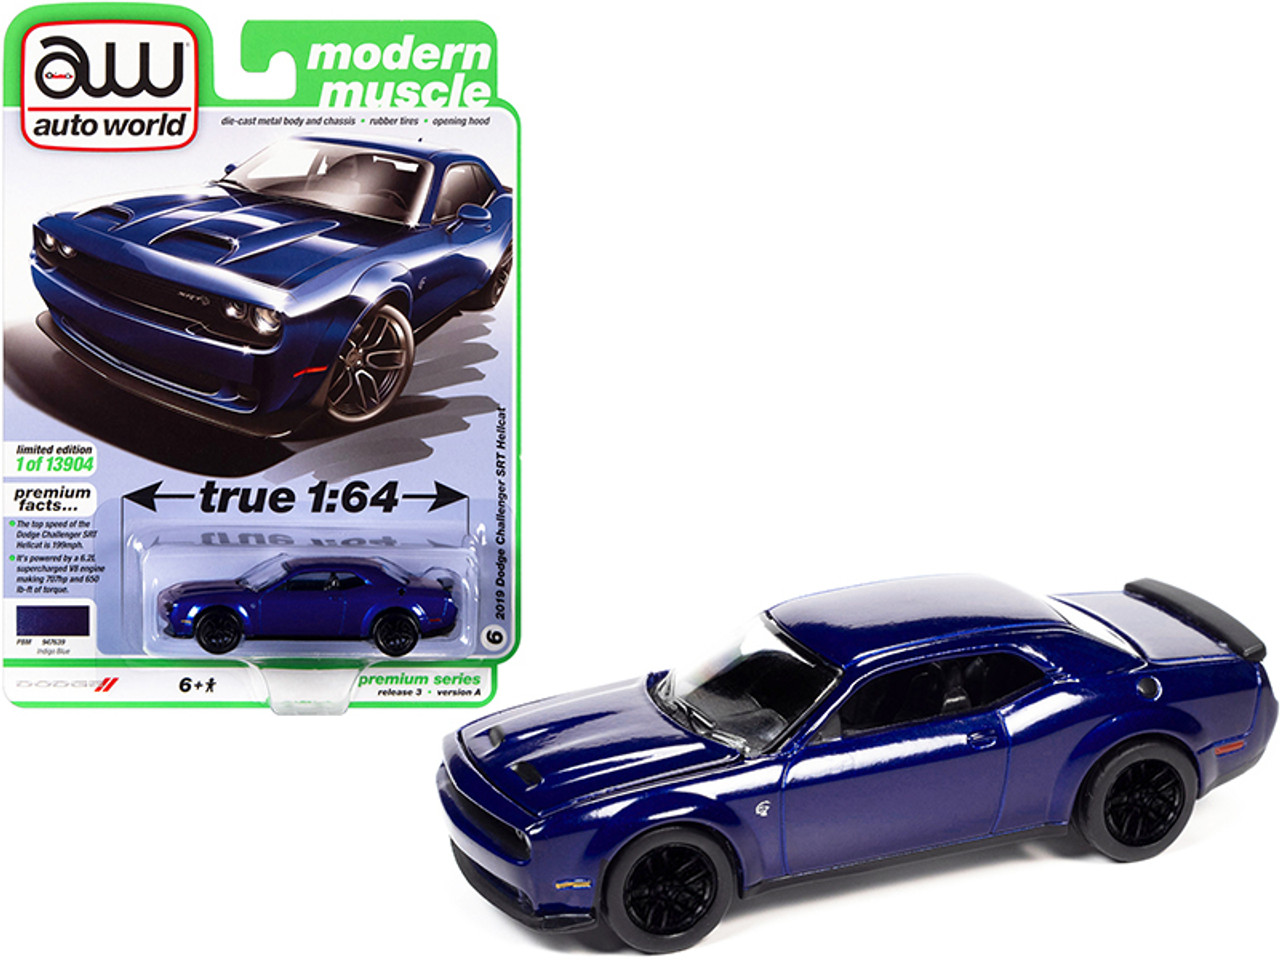 2019 Dodge Challenger SRT Hellcat Indigo Blue Metallic "Modern Muscle" Limited Edition to 13904 pieces Worldwide 1/64 Diecast Model Car by Autoworld